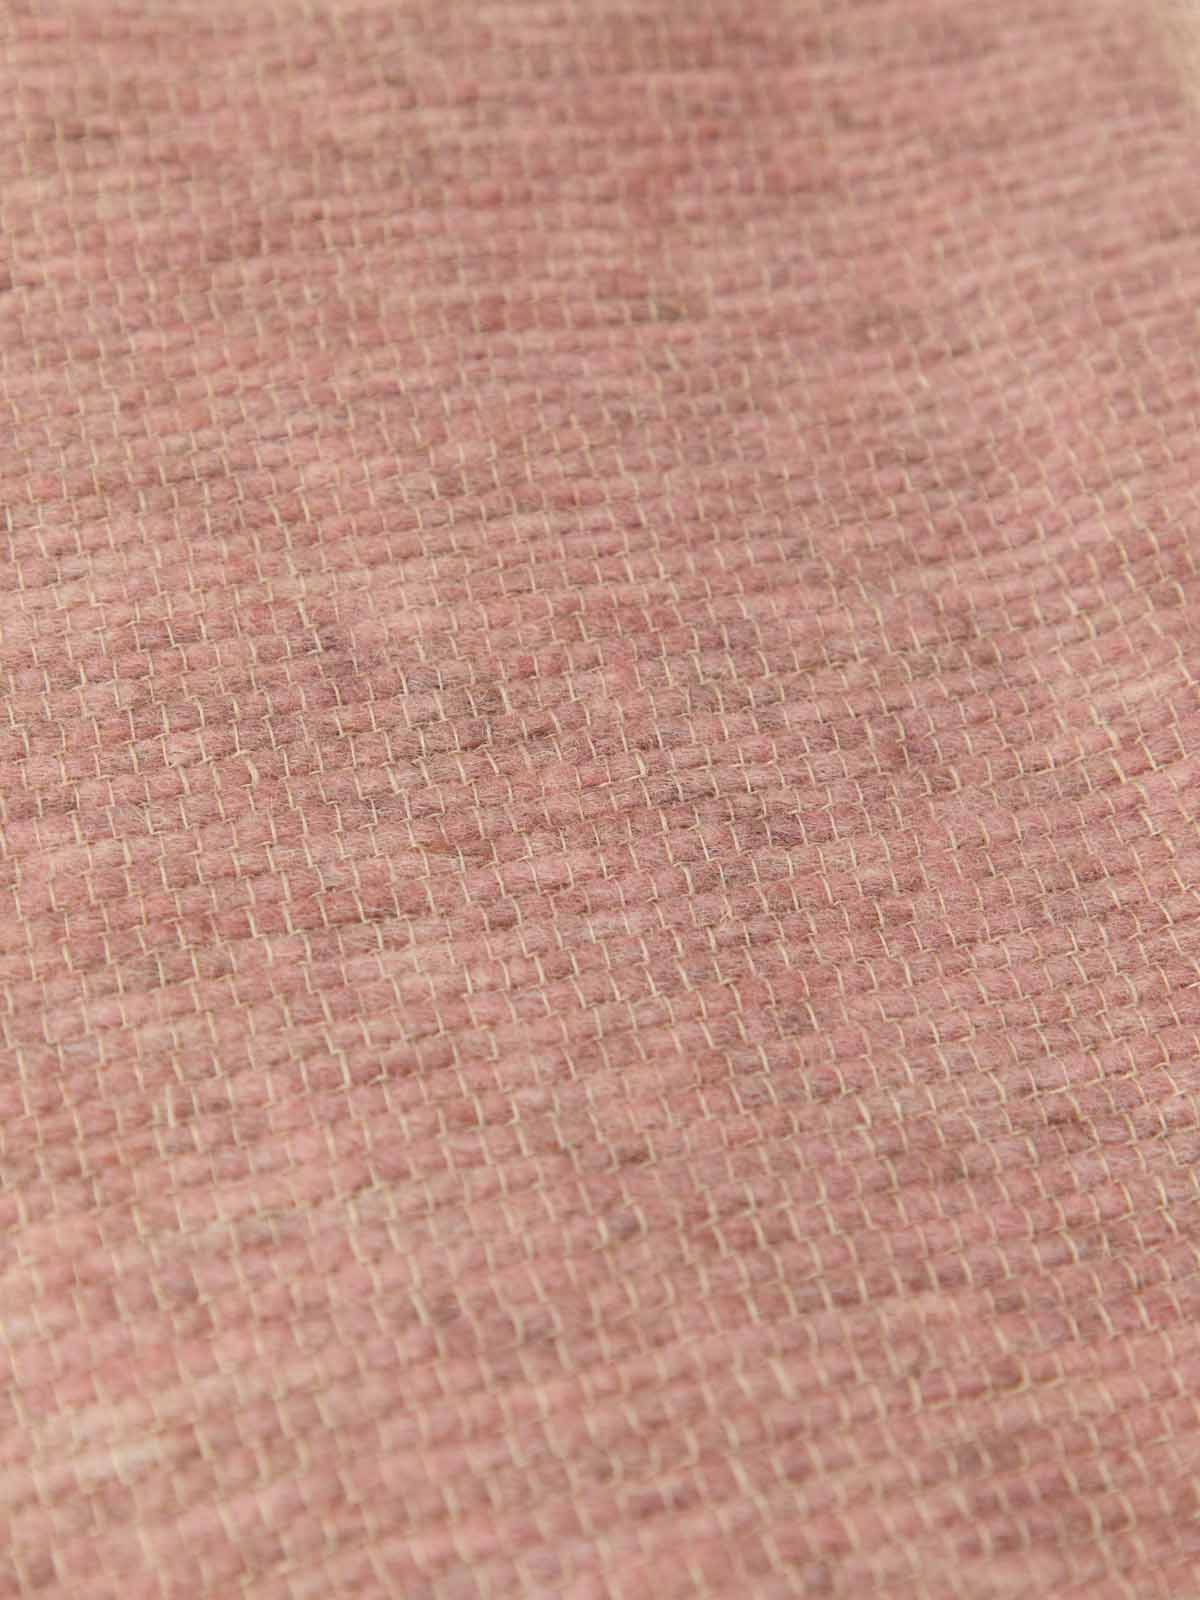 Allen Throw in Light Pink by Uniq'uity close up